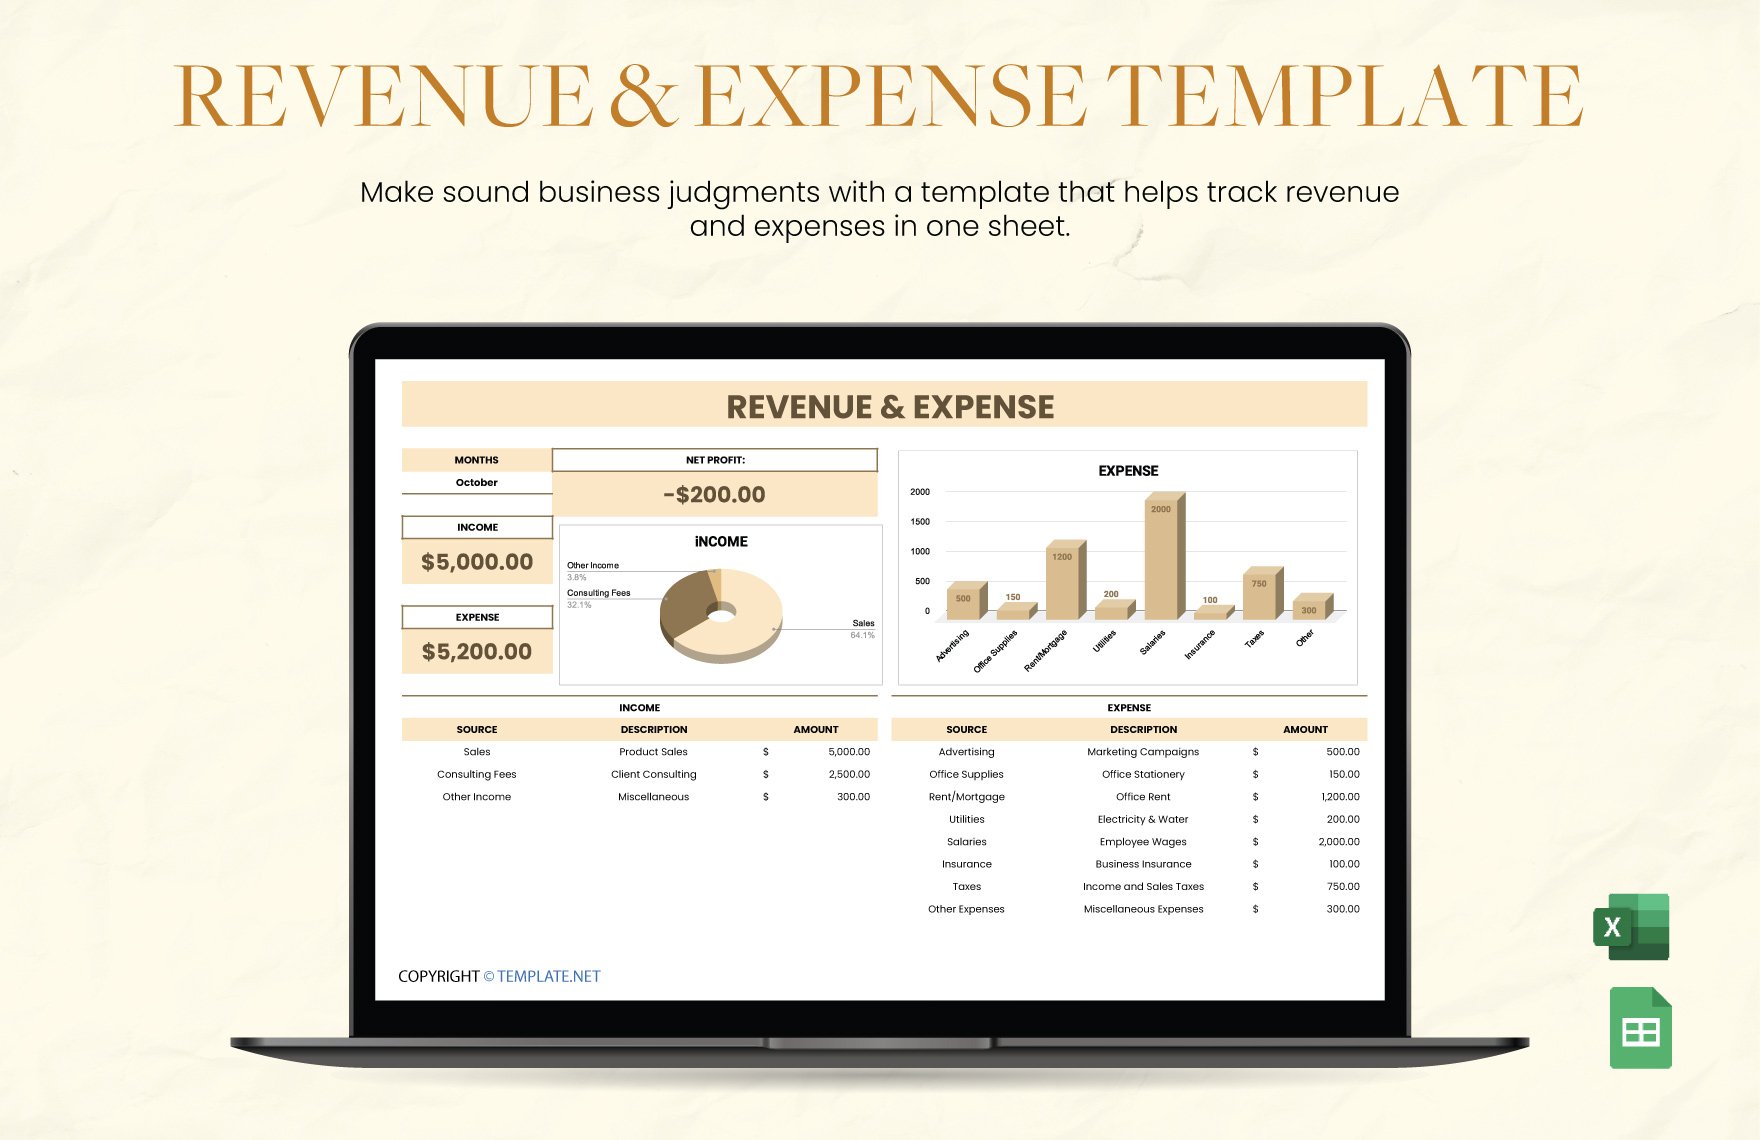 Revenue & Expense Template